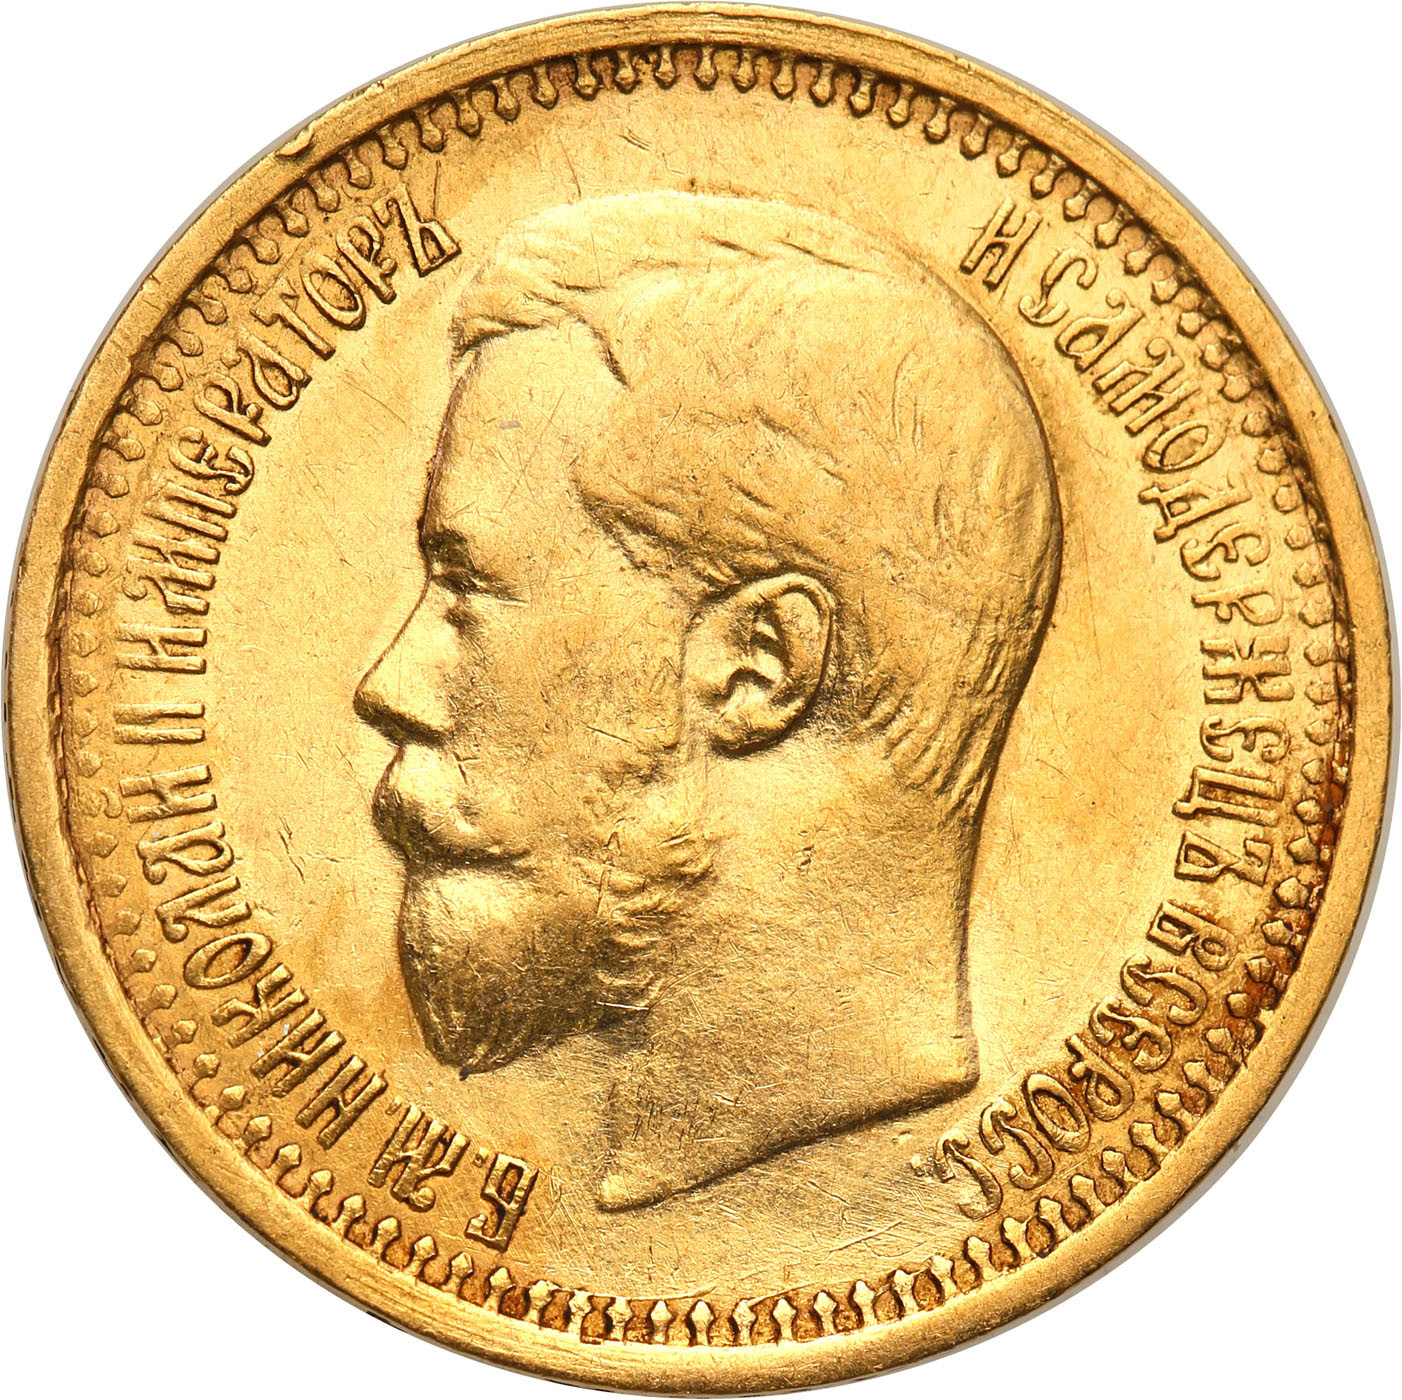 Rosja. Mikołaj II 7 rubla 50 kopiejek (7,5 Rubla) 1897 (AГ), Petersburg